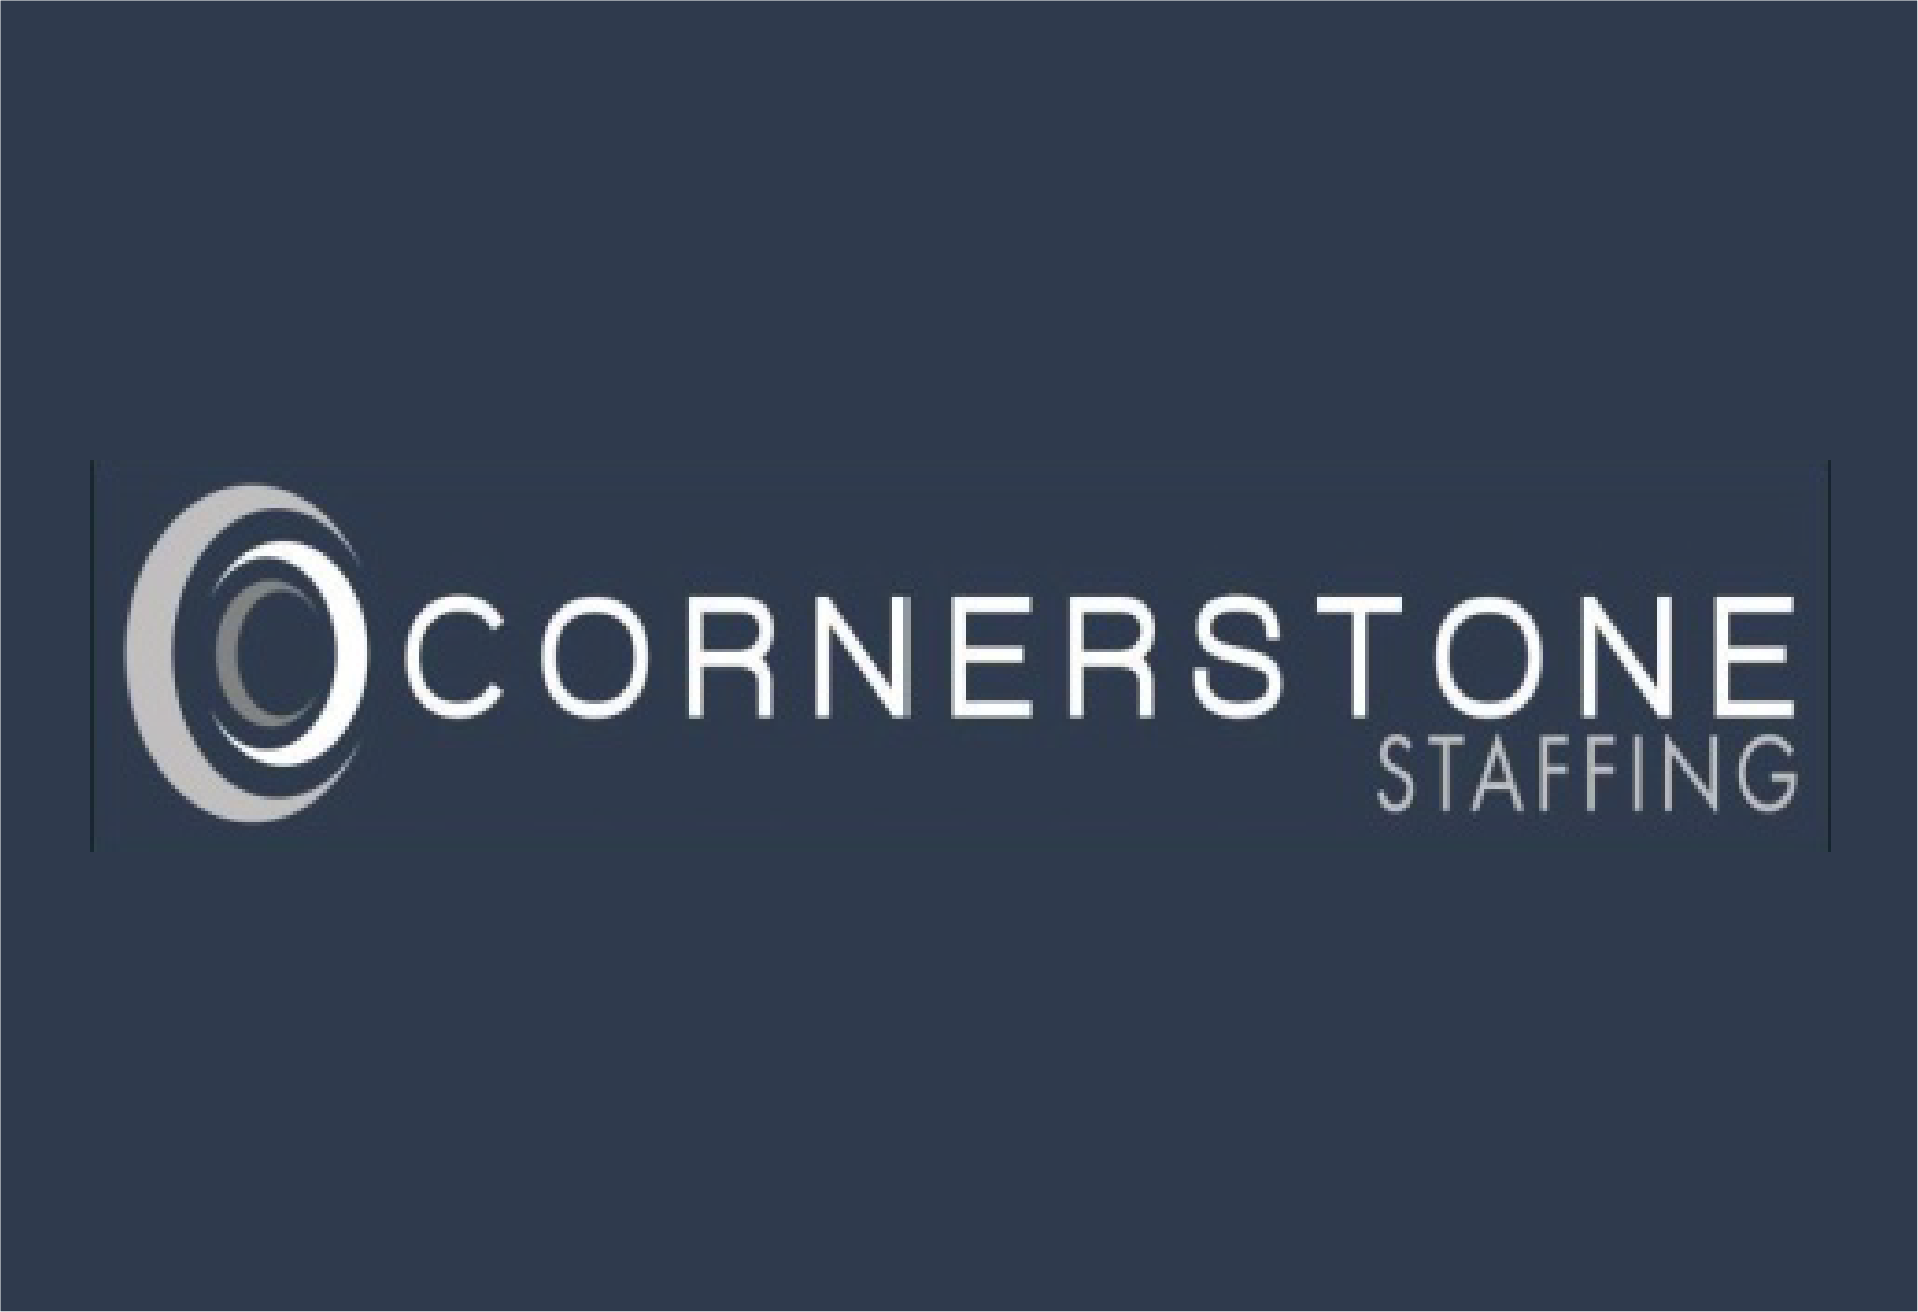 Cornerstone staffing